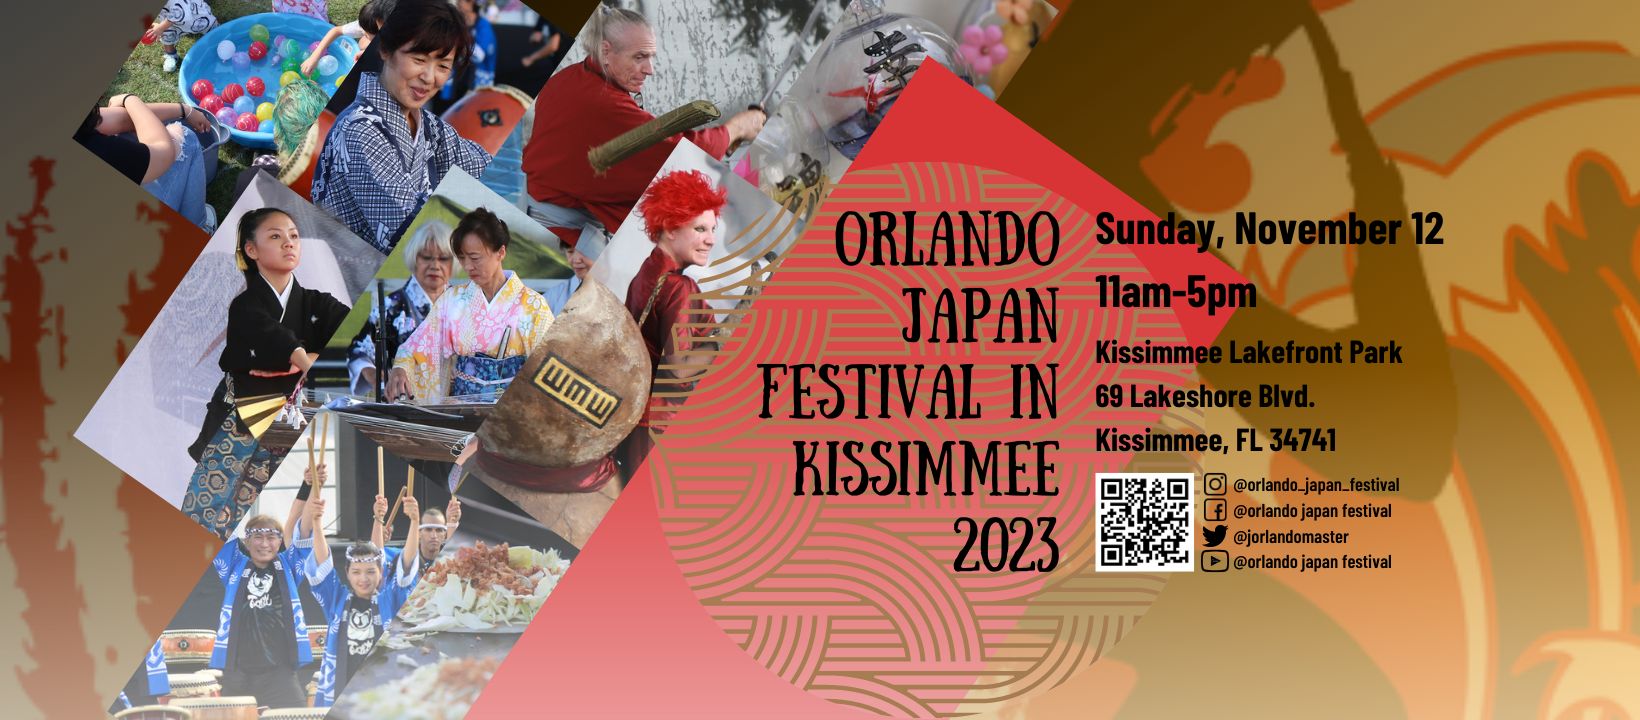 Orlando Japan Festival in Kissimmee 2023 | Park Ave Magazine